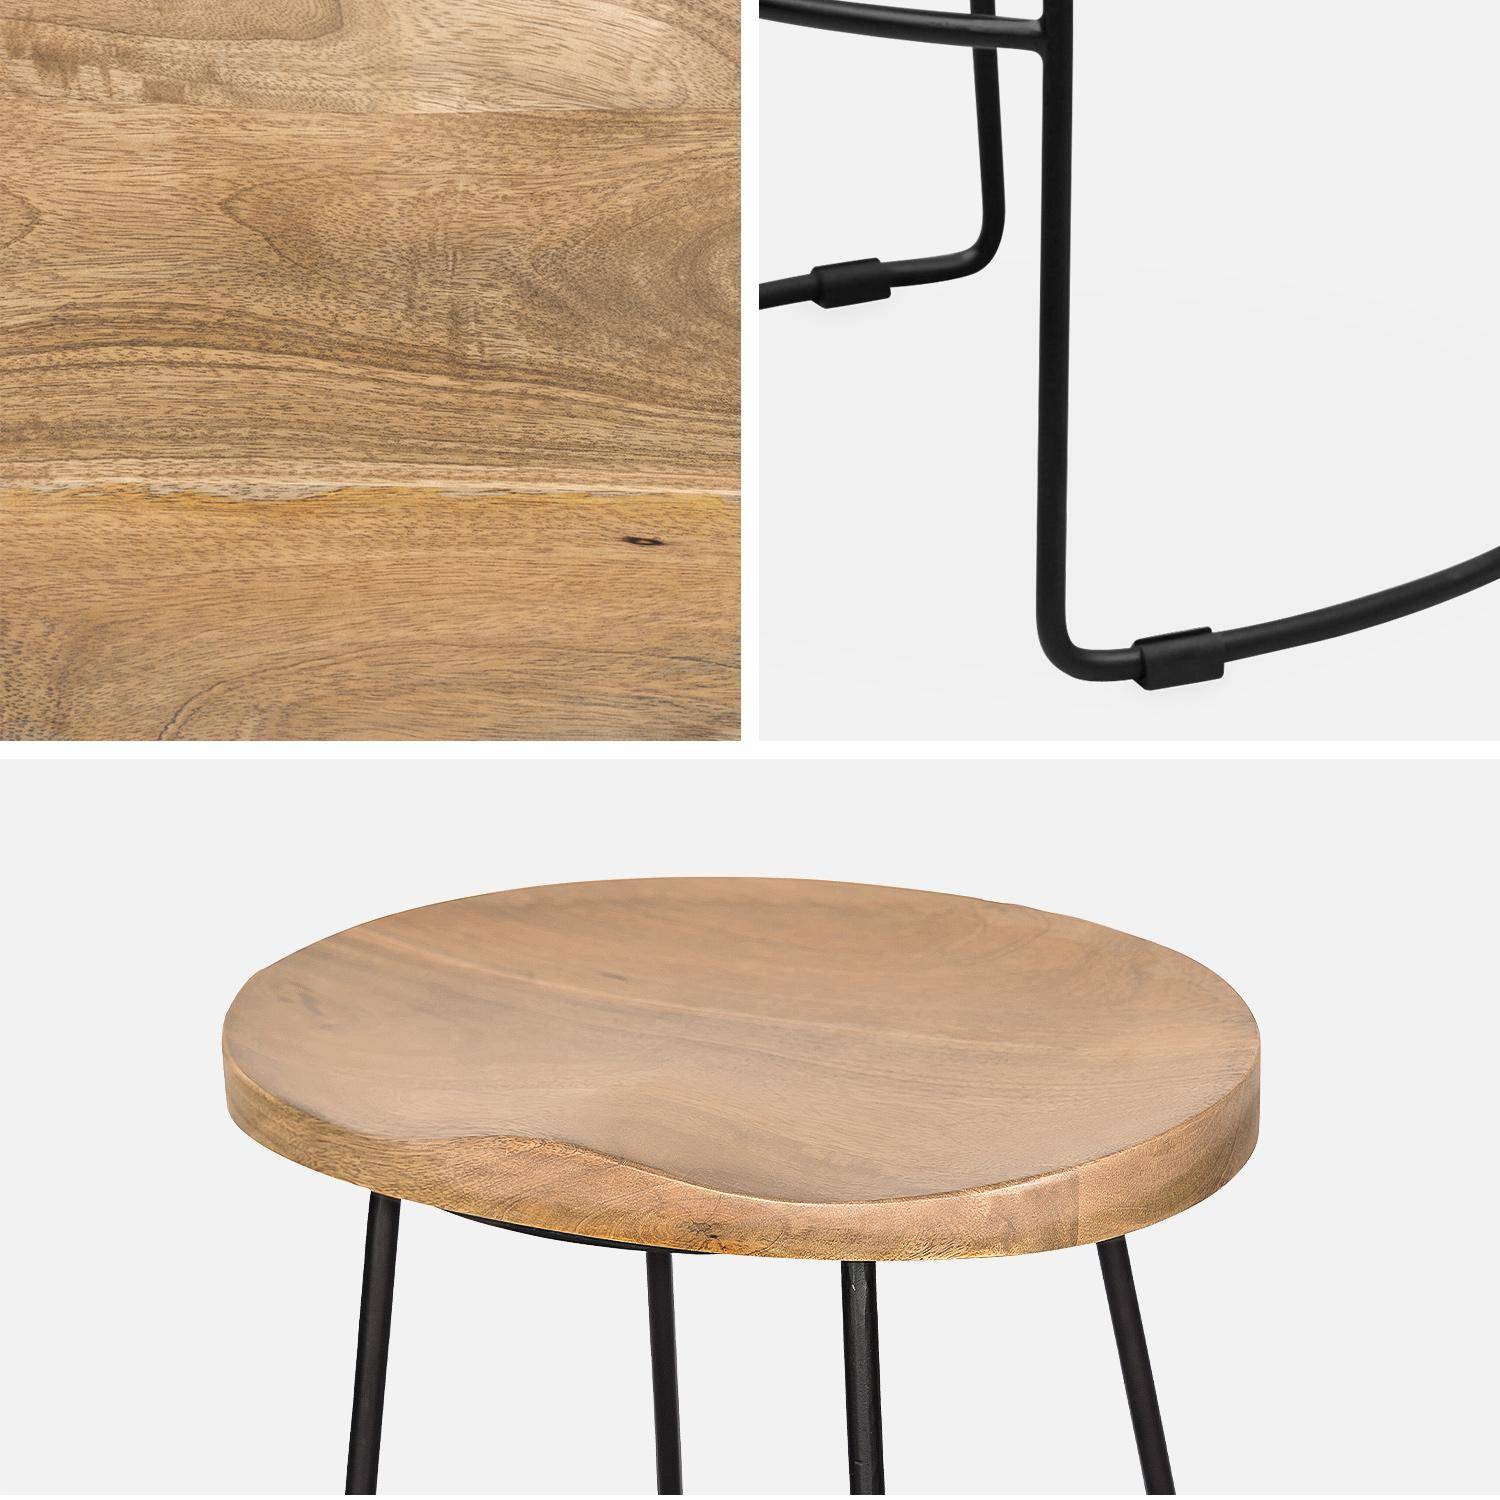 Set of 4 industrial metal and wooden bar stools, 44x36x65cm, Jaya, Mango wood seat, black metal legs,sweeek,Photo7